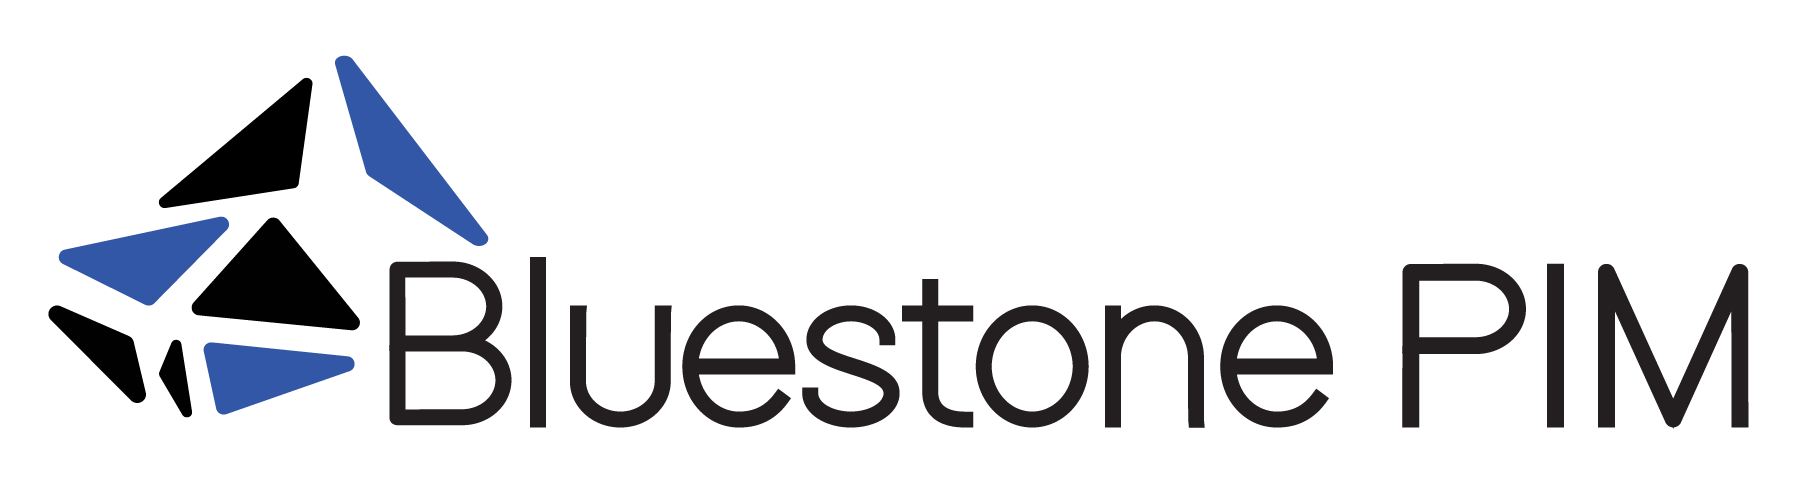 Bluestone PIM logo 